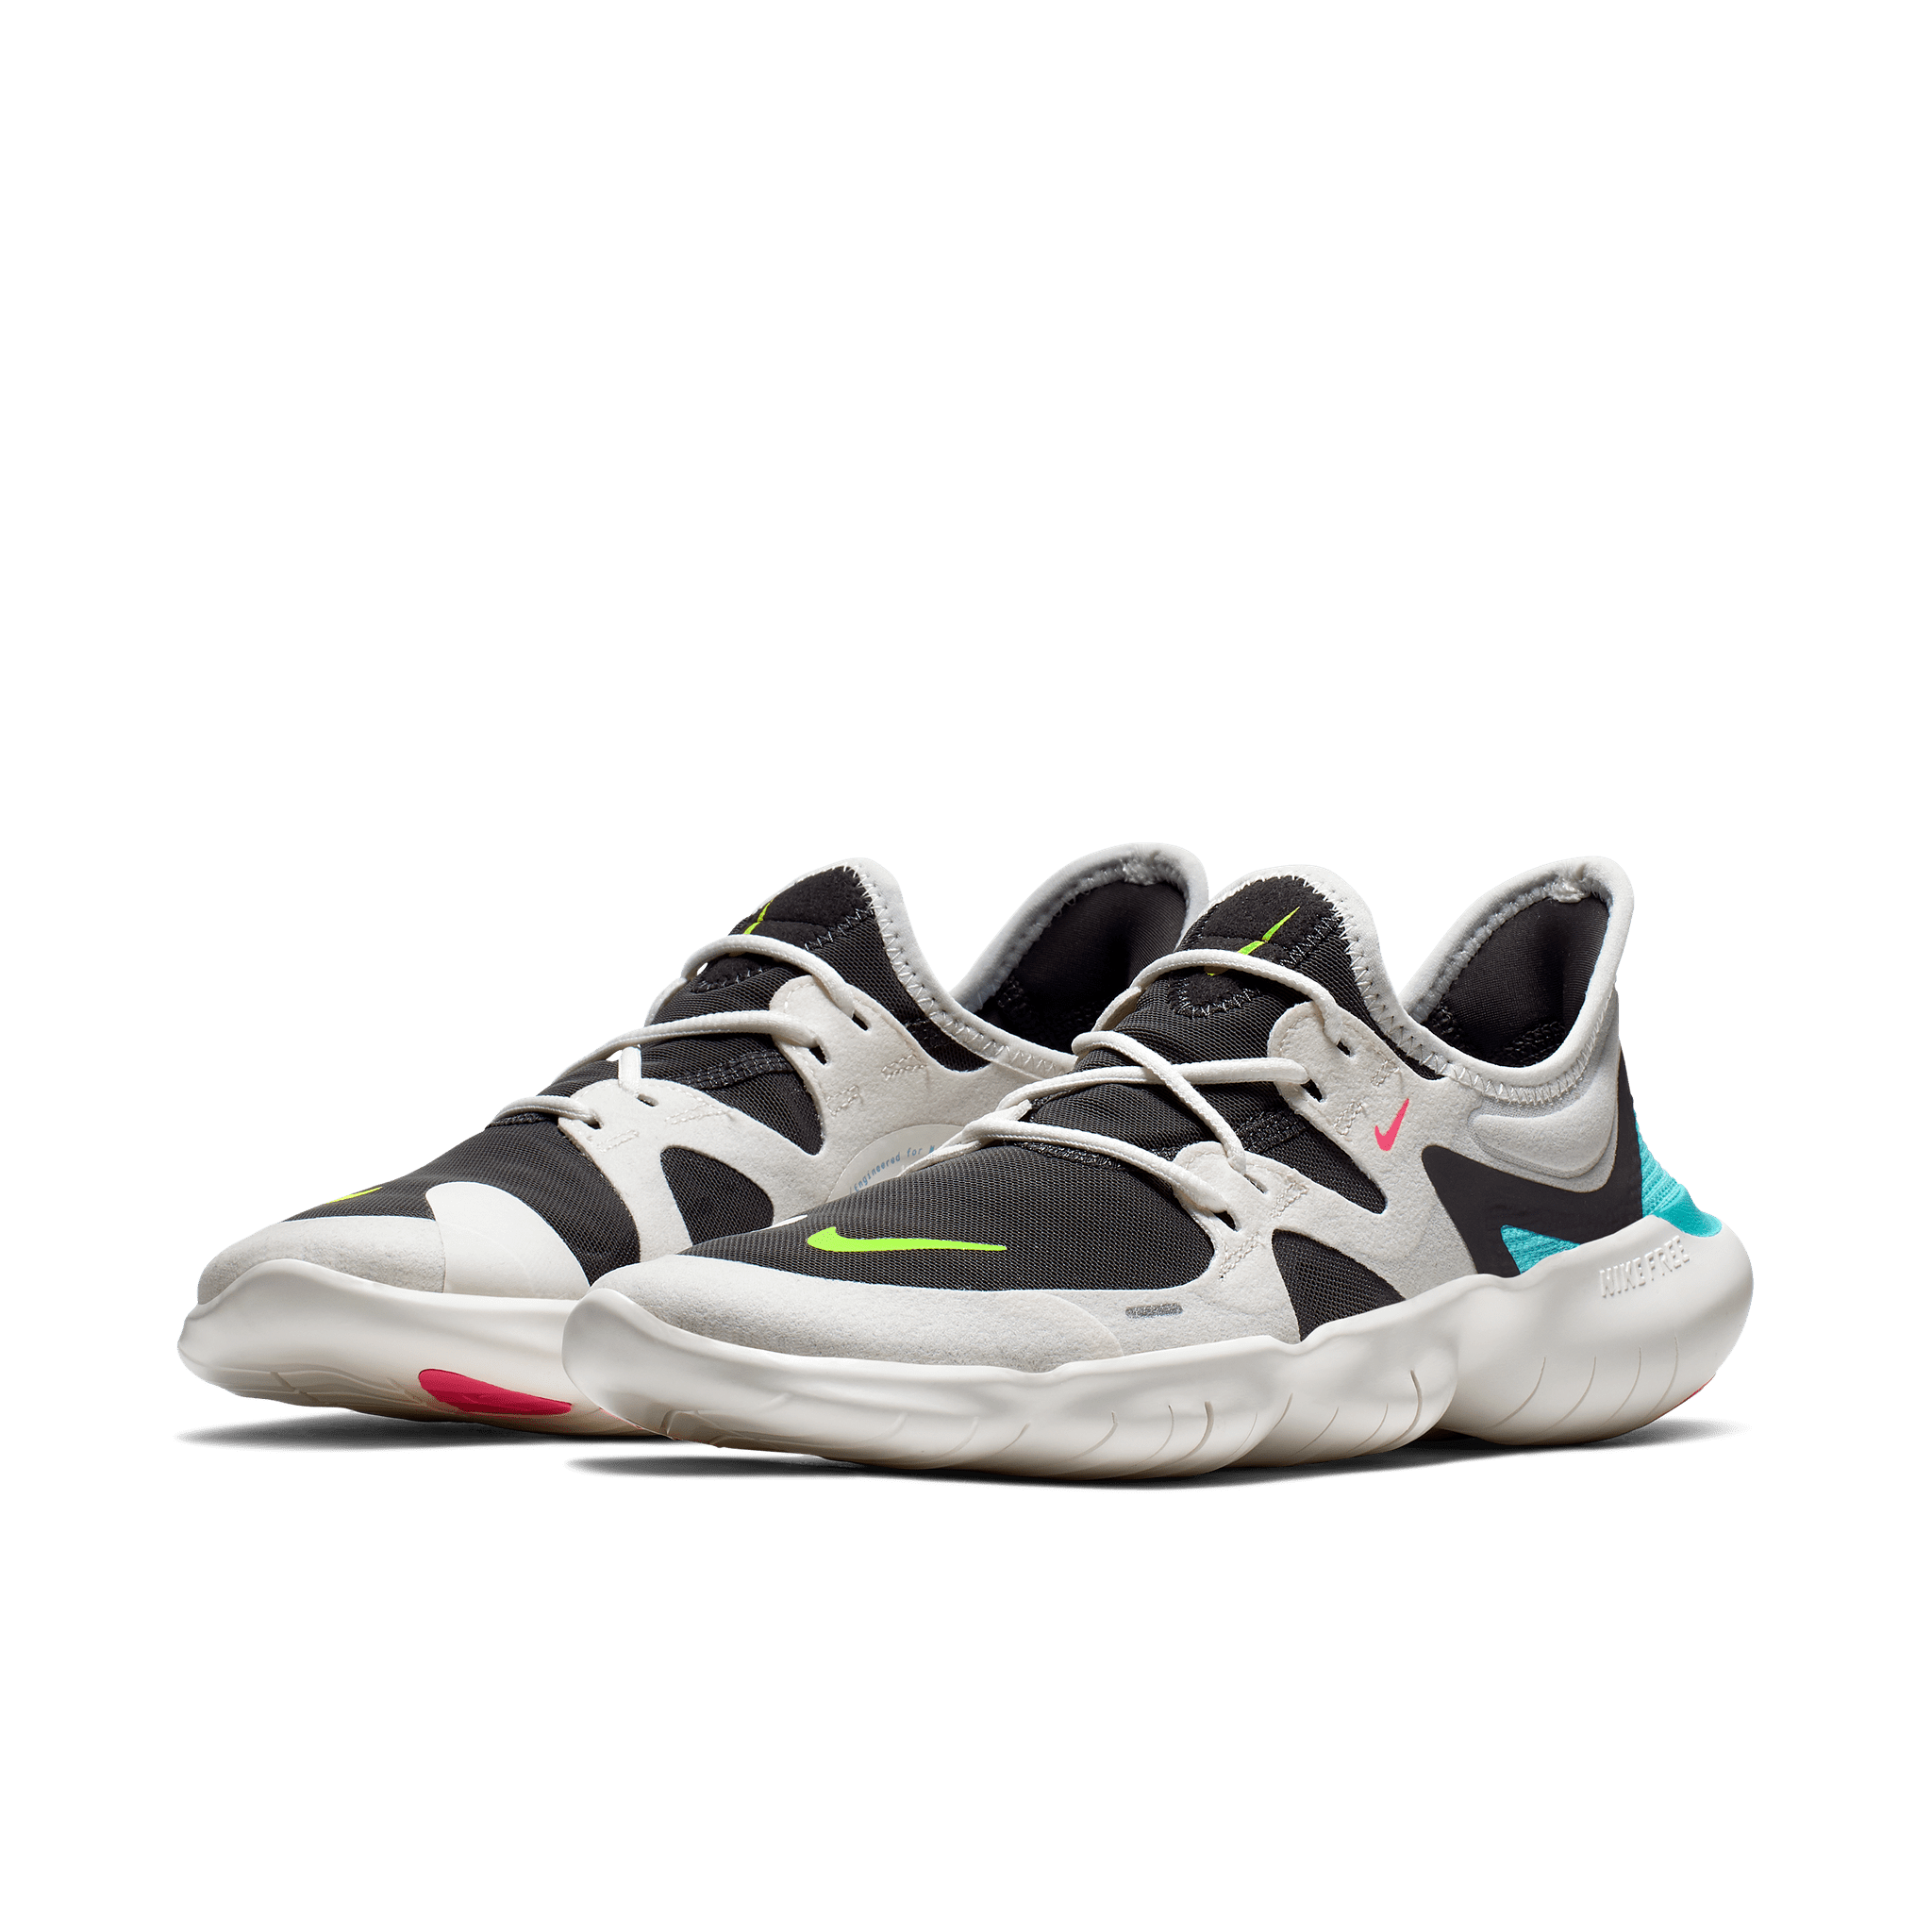 Existence planter sticker Nike Free 5.0 Running Shoe 2019 | POPSUGAR Fitness